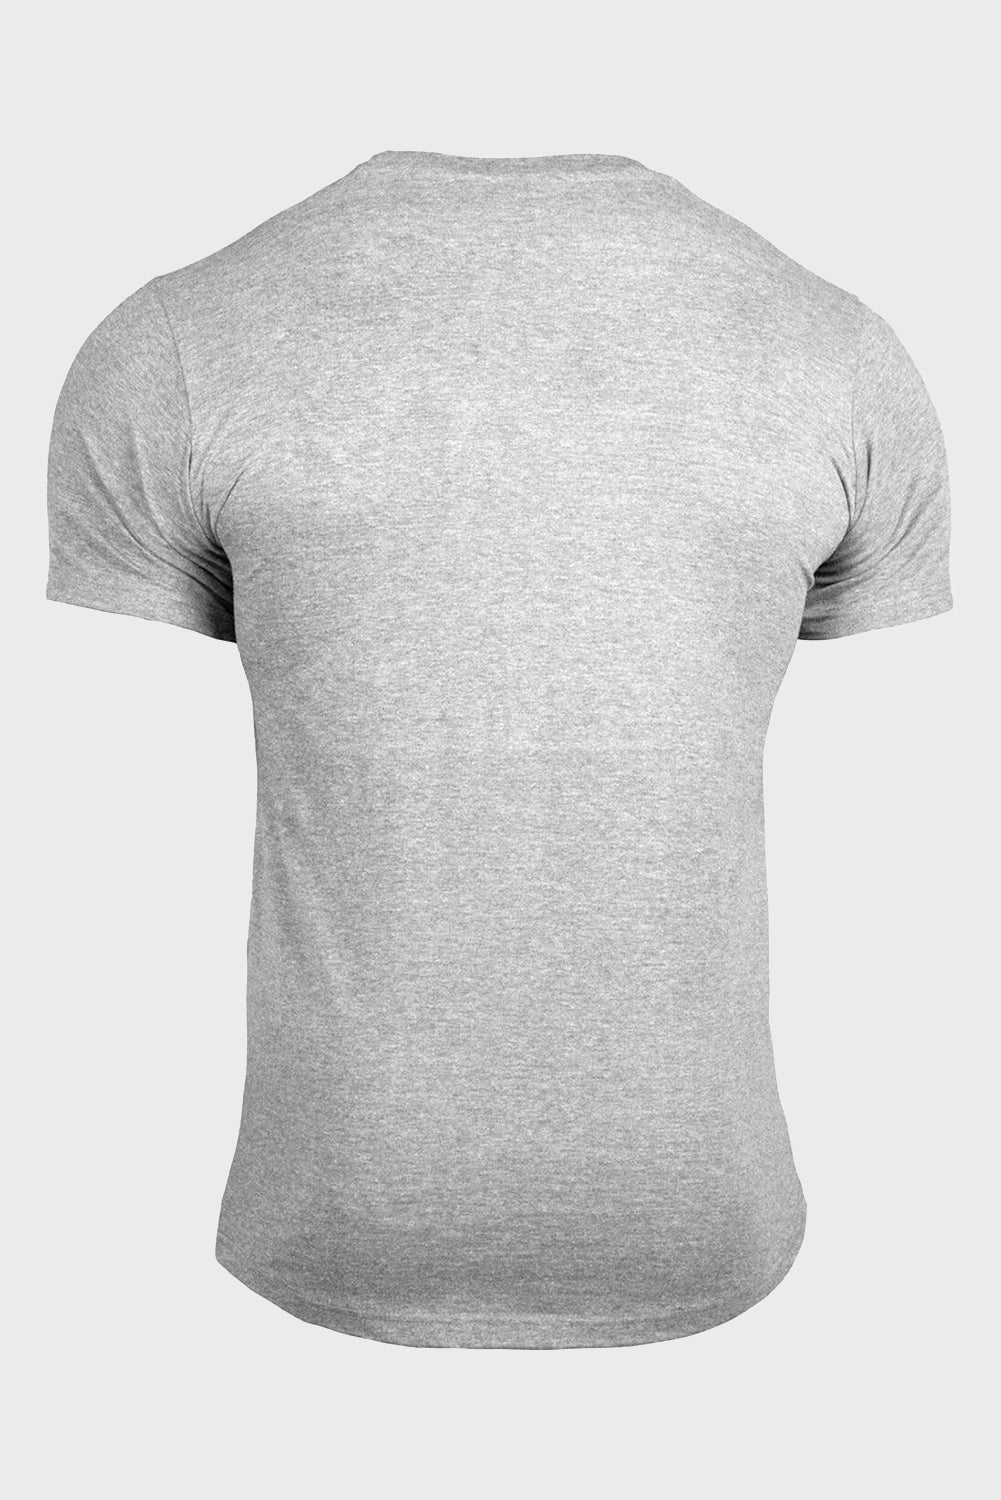 Gray Talk To Me Goose American Flag Graphic Print Men's T Shirt Men's Tops JT's Designer Fashion